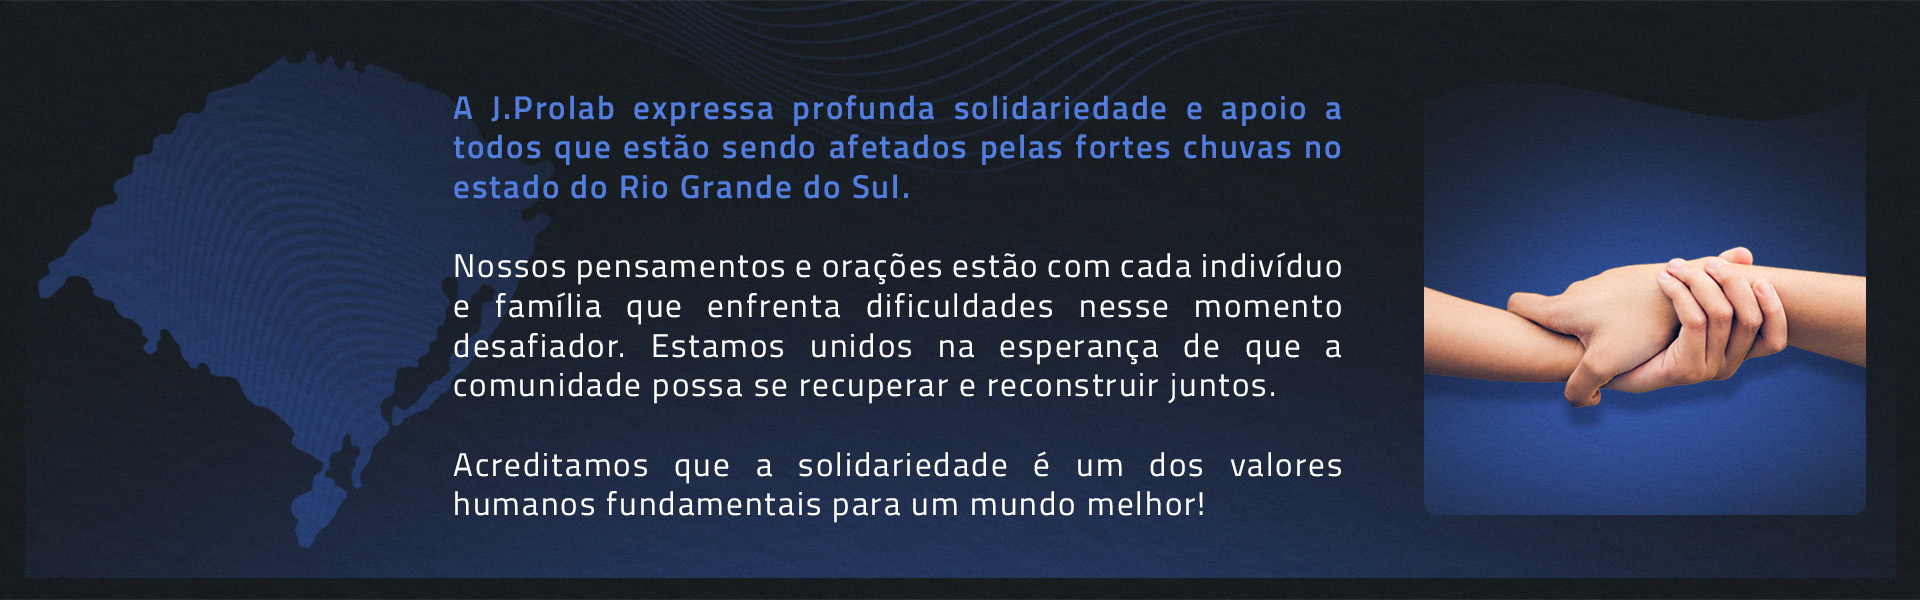 Apoio Rio Grande do Sul